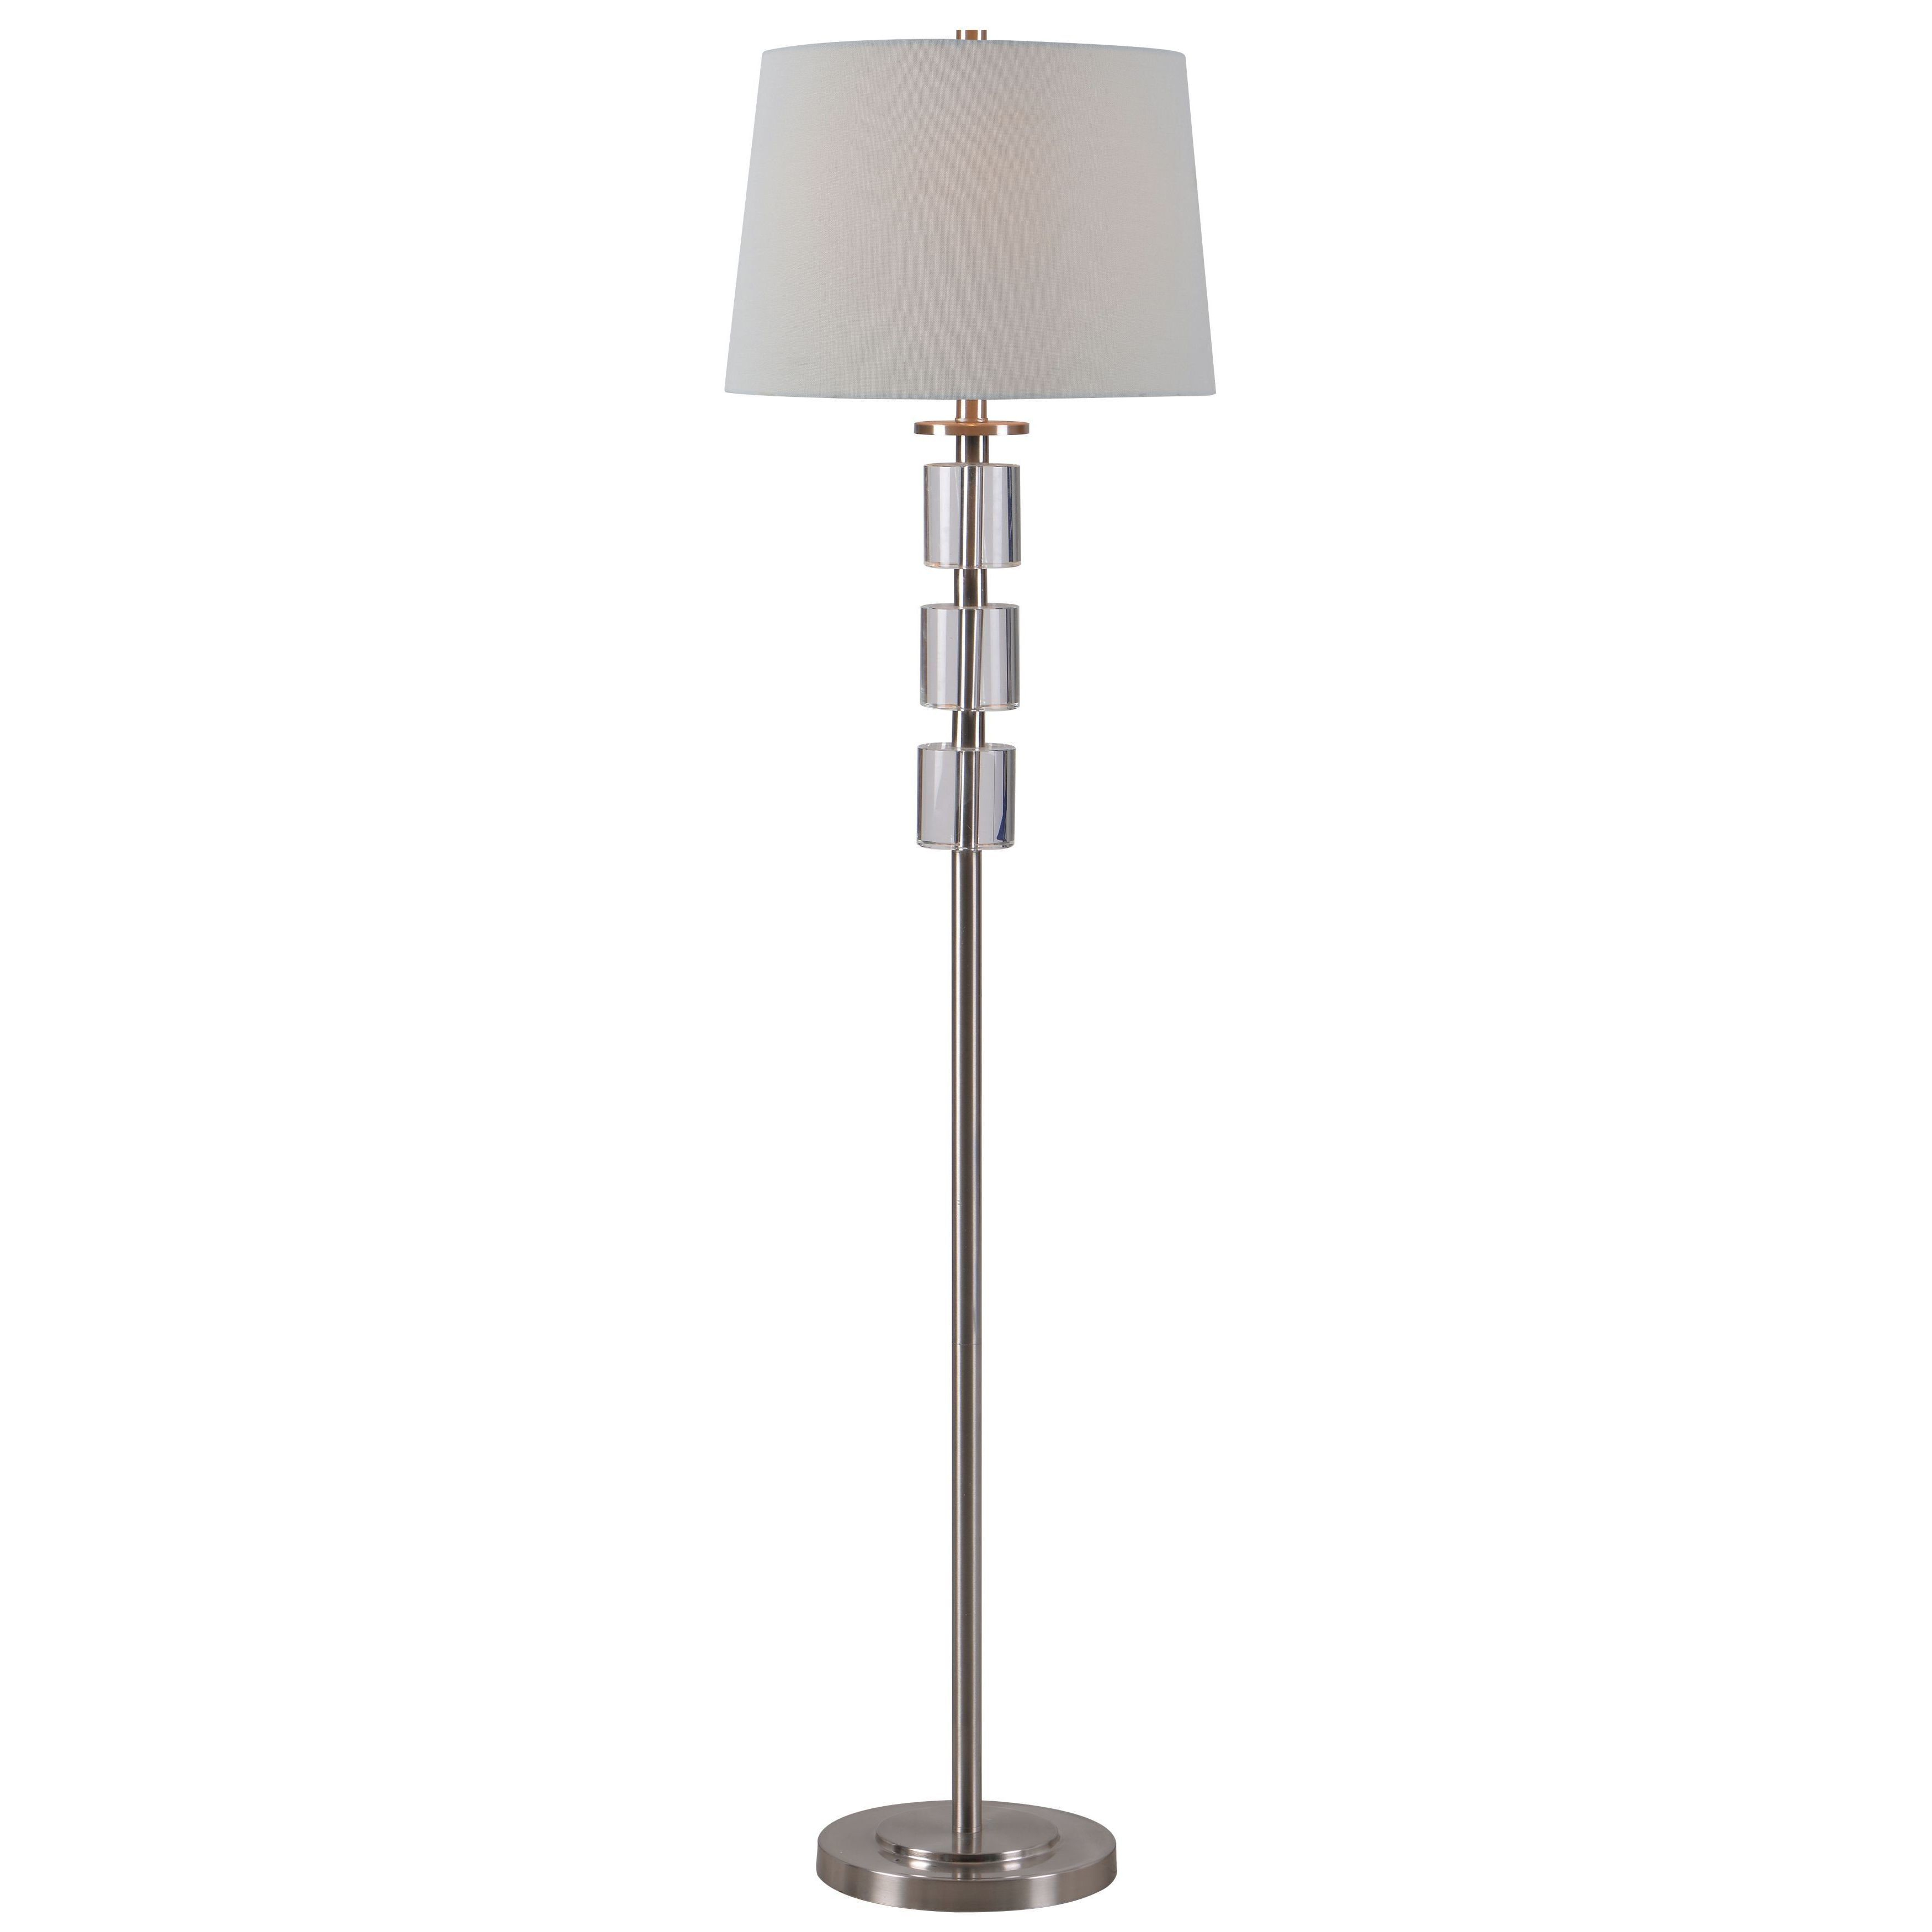 Crystal Floor Lamp Overstock Shopping The Best Deals in measurements 3500 X 3500